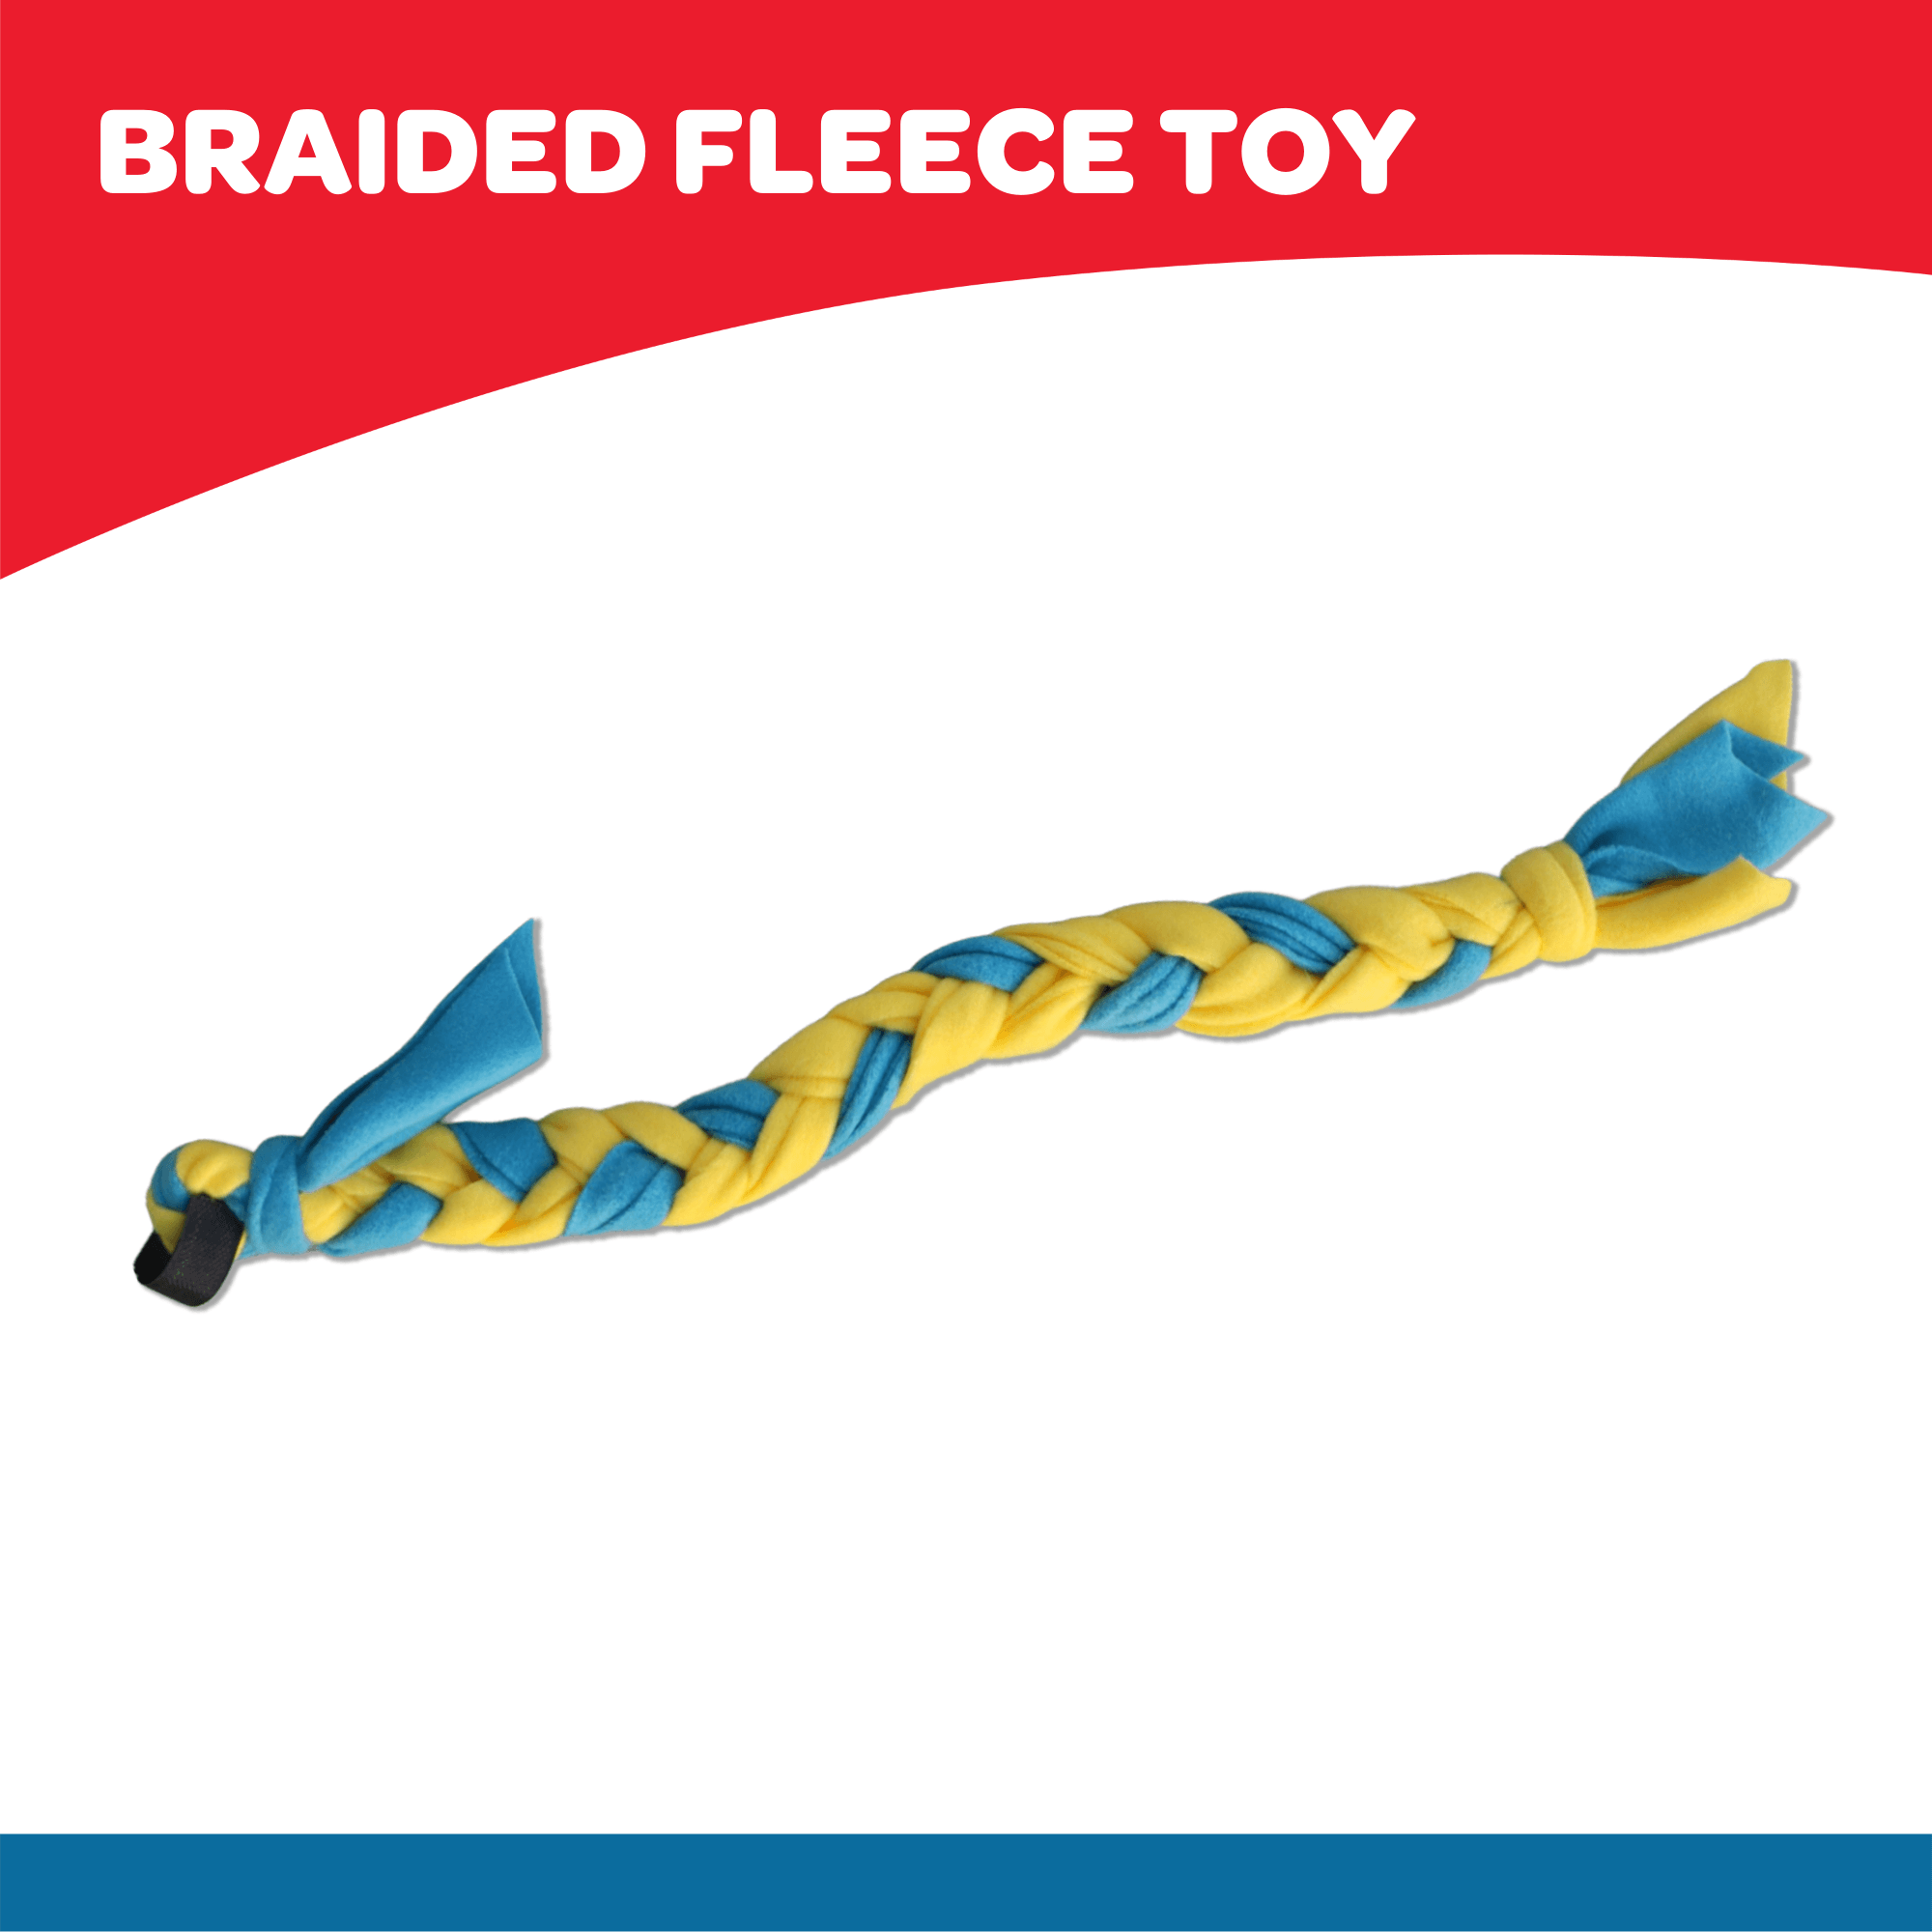 Braided Fleece Toy - Tether Tug